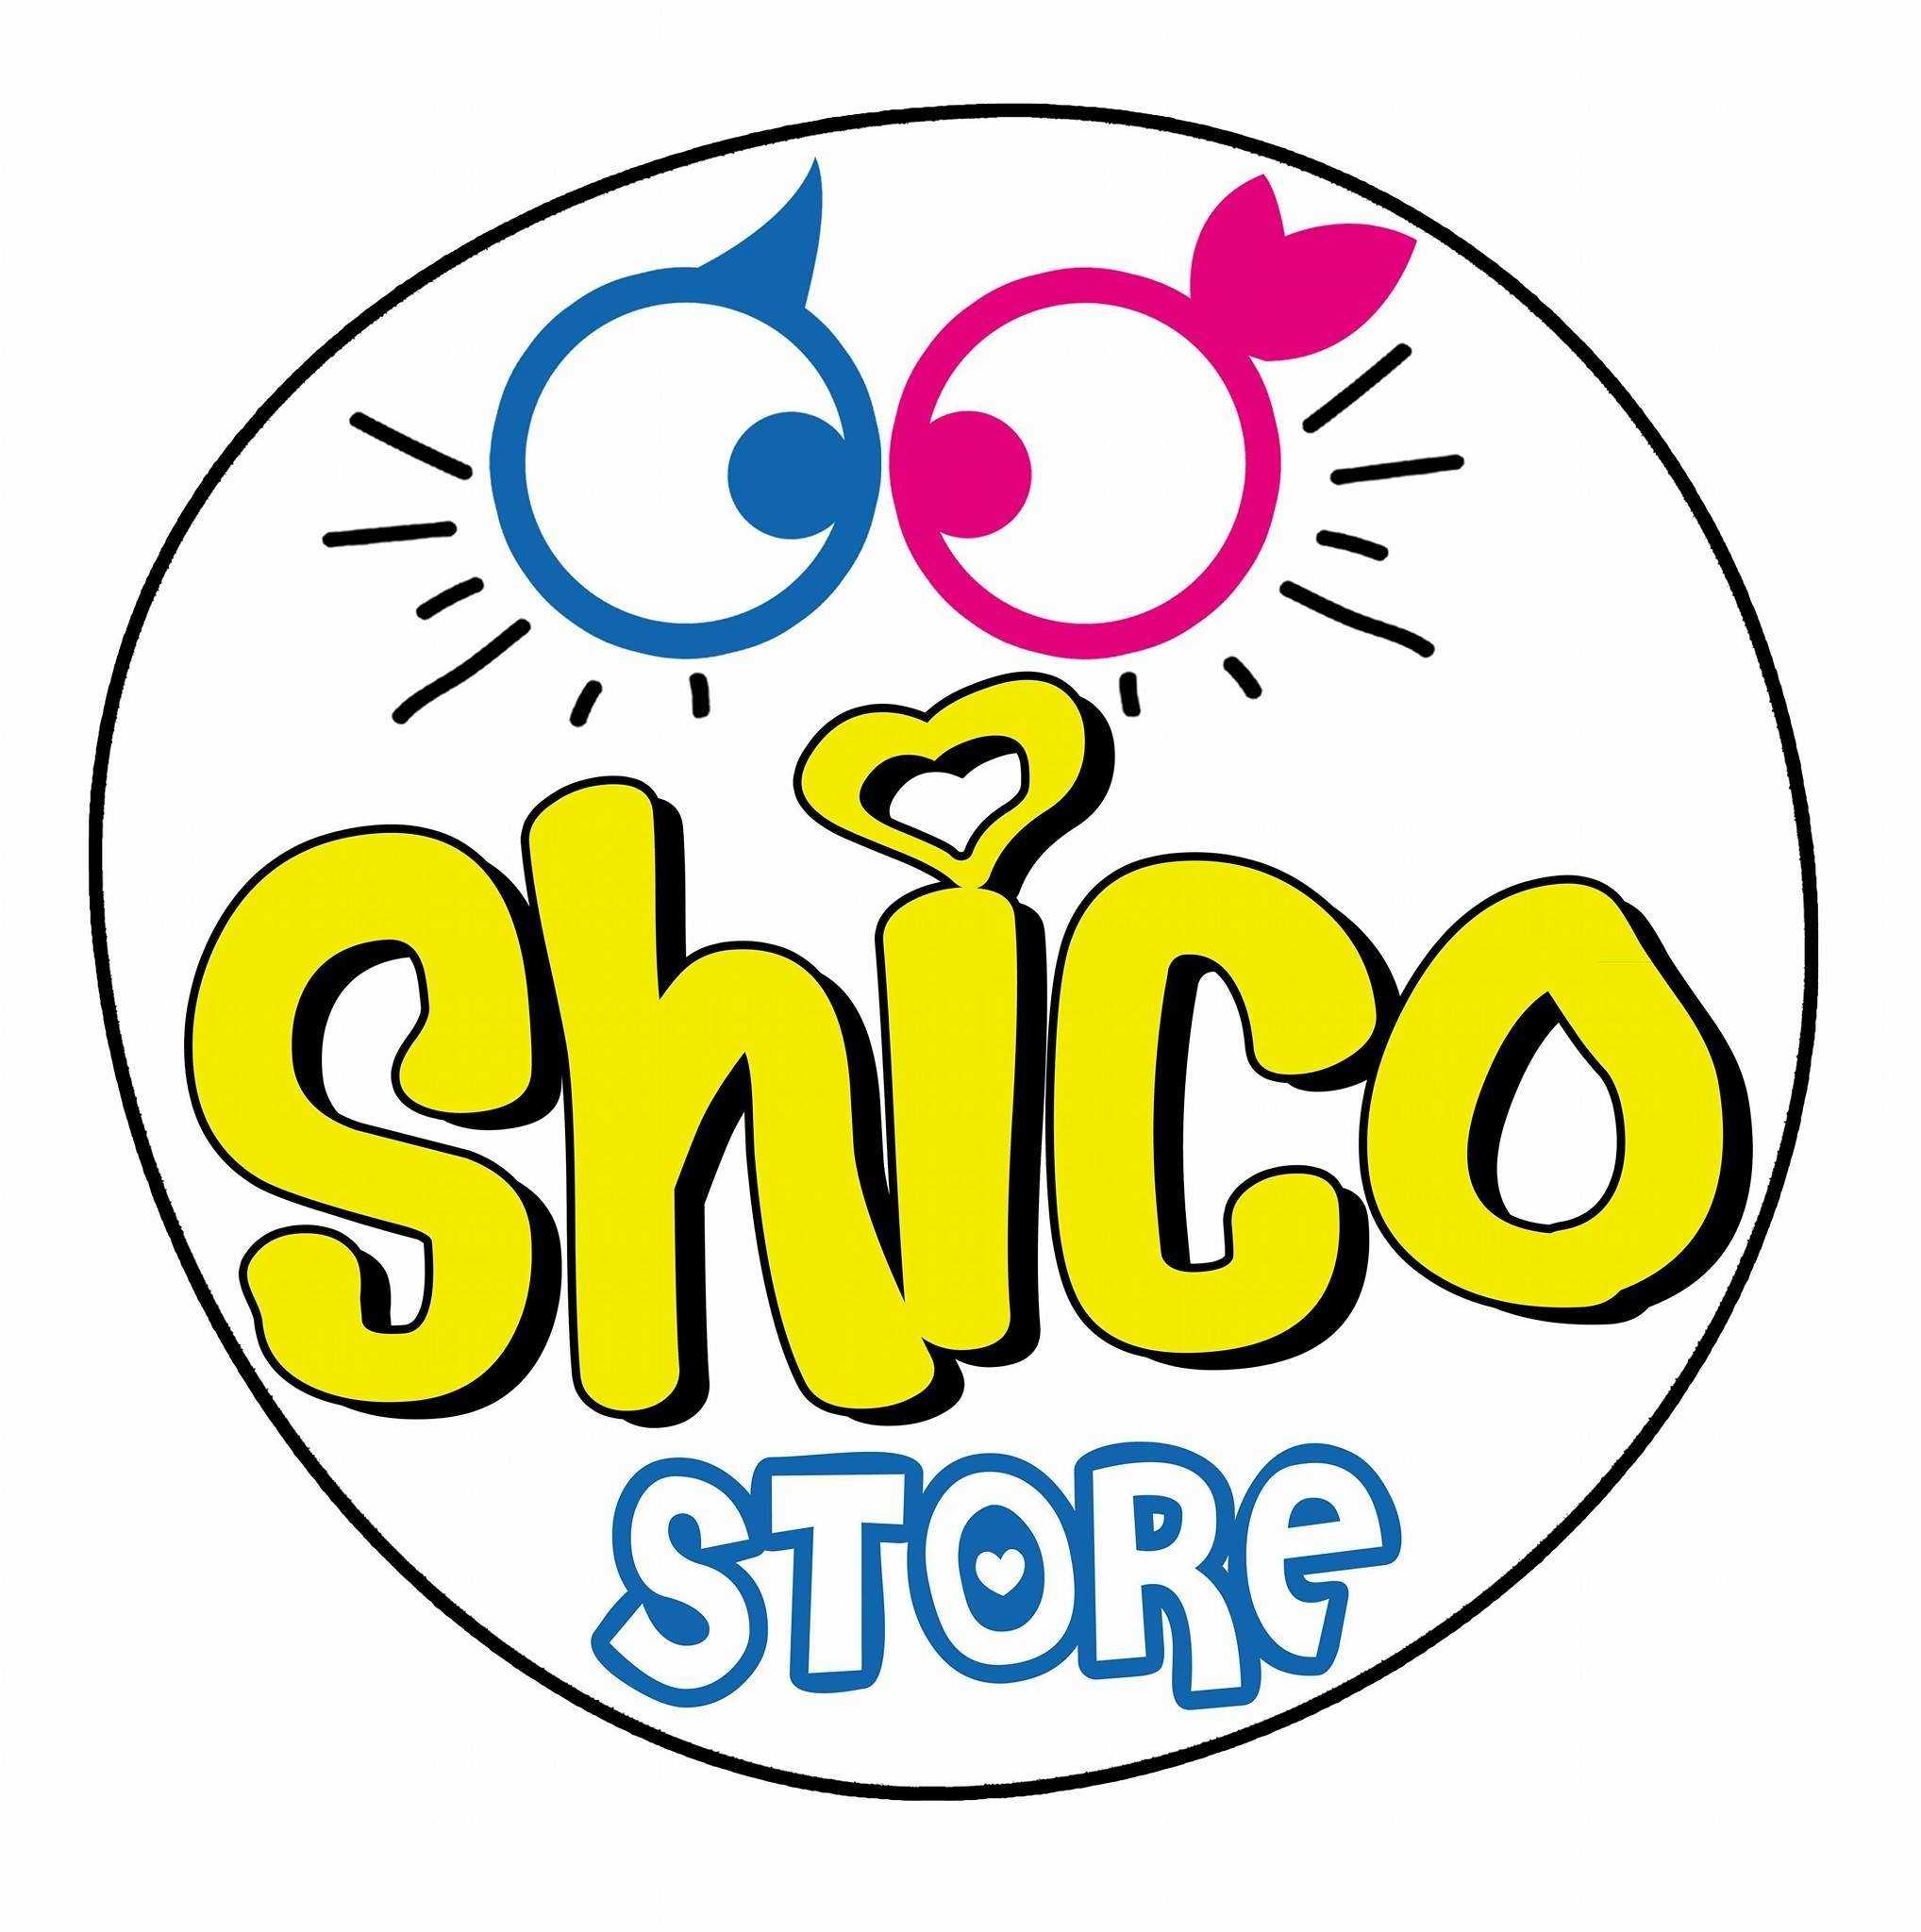 Shico Store